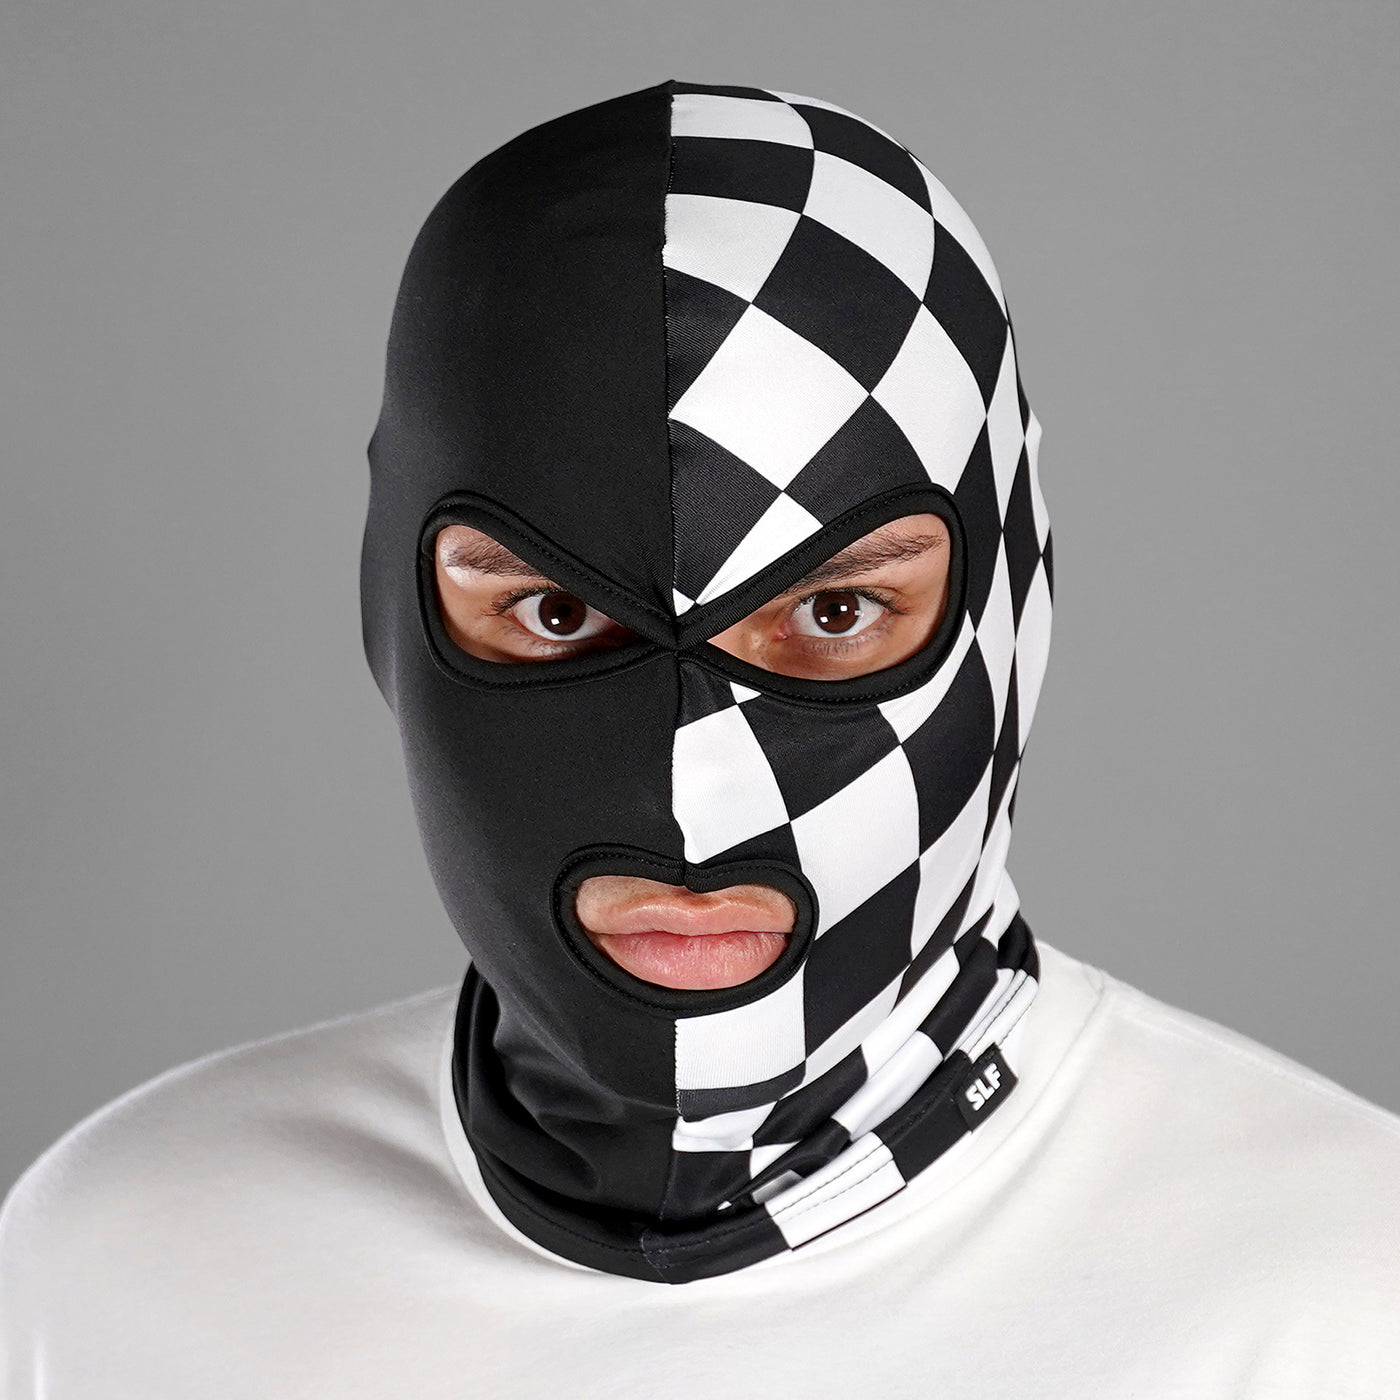 Checkers 3 Hole Ski Mask